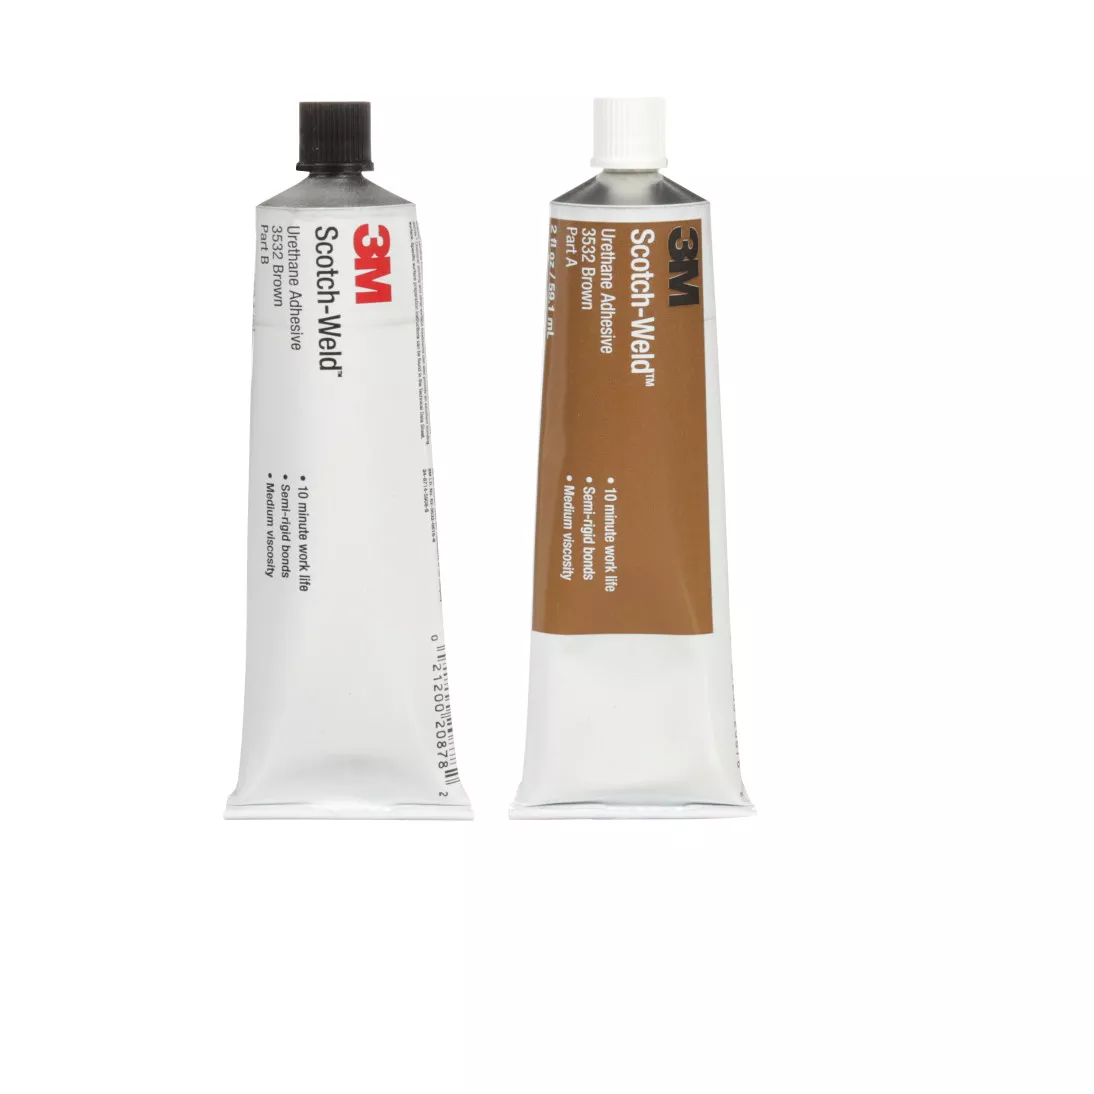 3M™ Scotch-Weld™ Urethane Adhesive 3532, Brown, Part B/A, 2 fl oz Tube
Kit, 6/Case